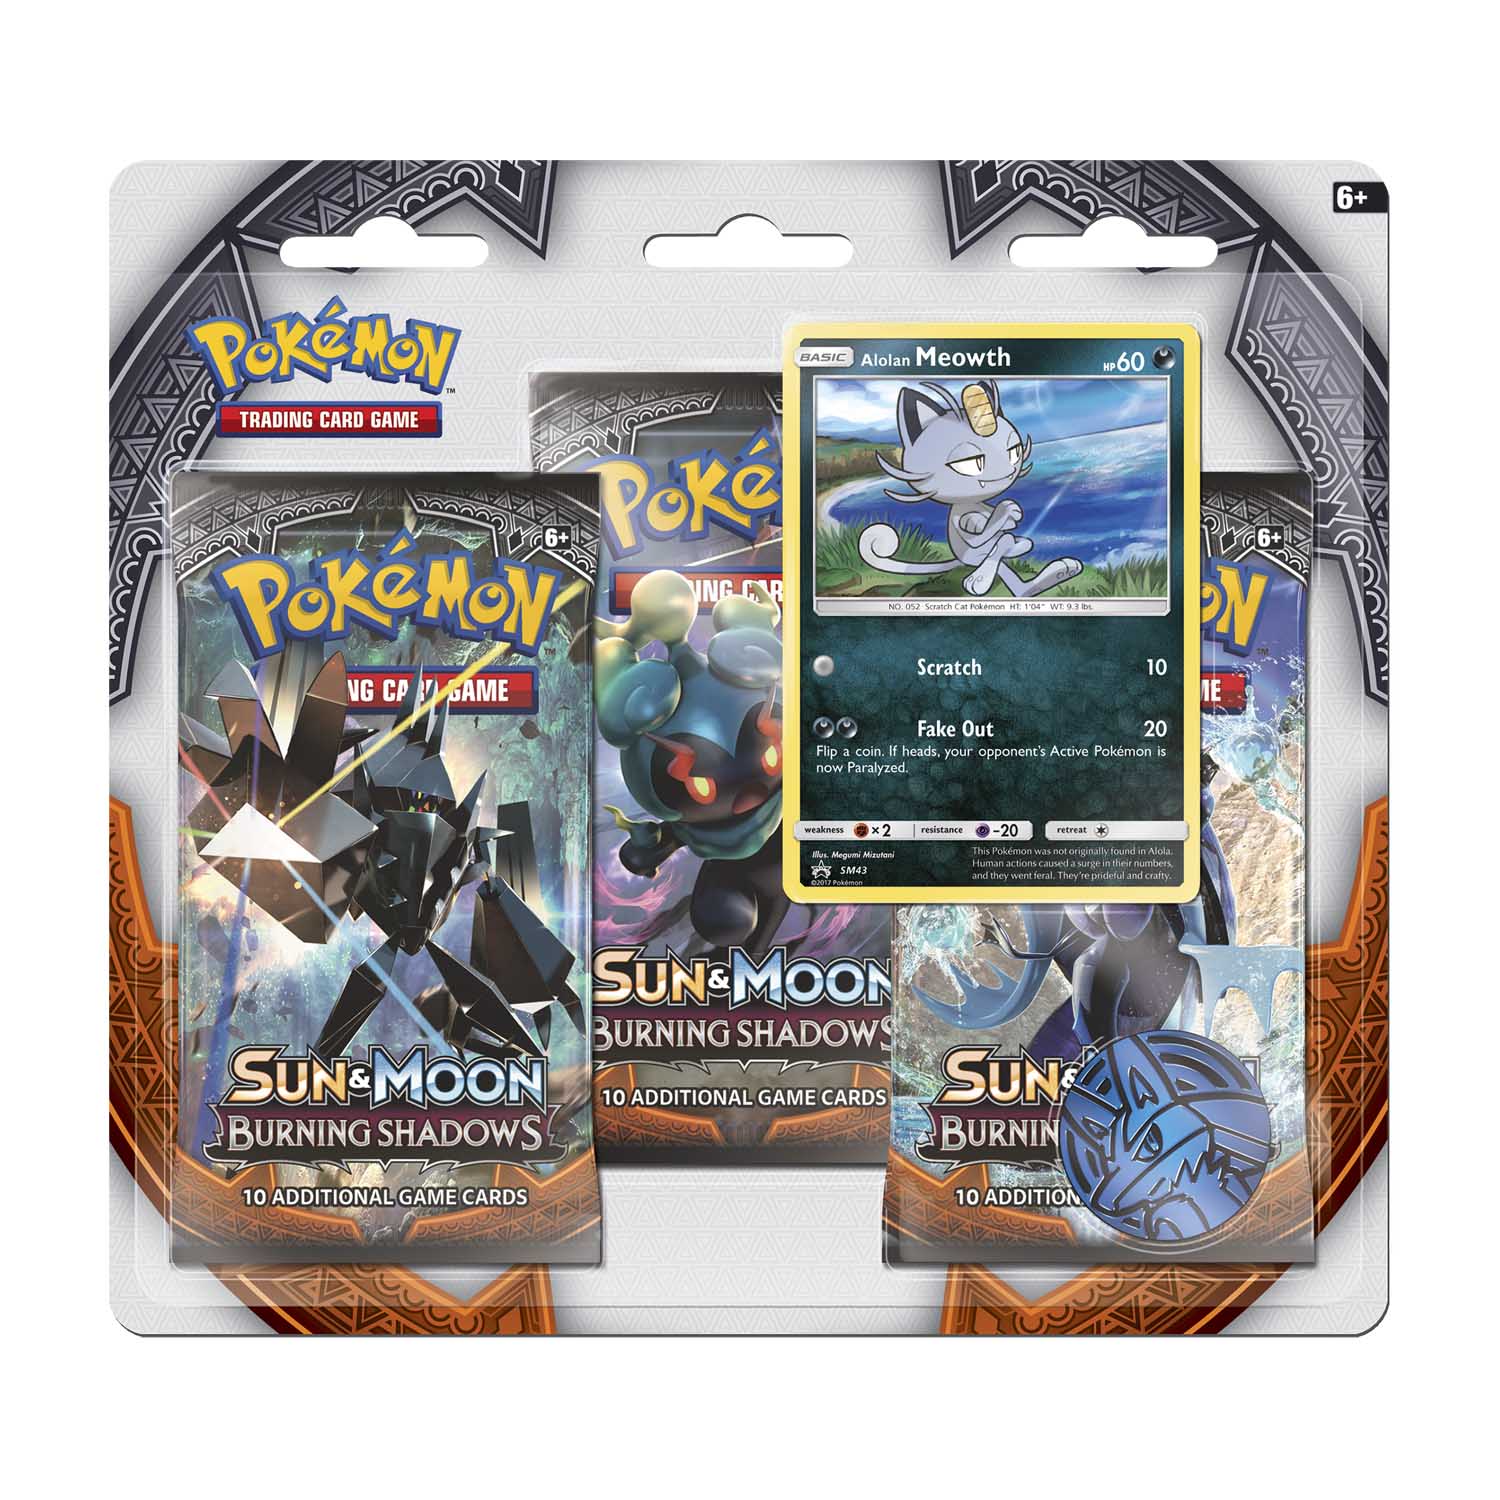 Pokémon Tcg Sun Moonburning Shadows 3 Booster Packs Plus Alolan Meowth Promo Card And Coin